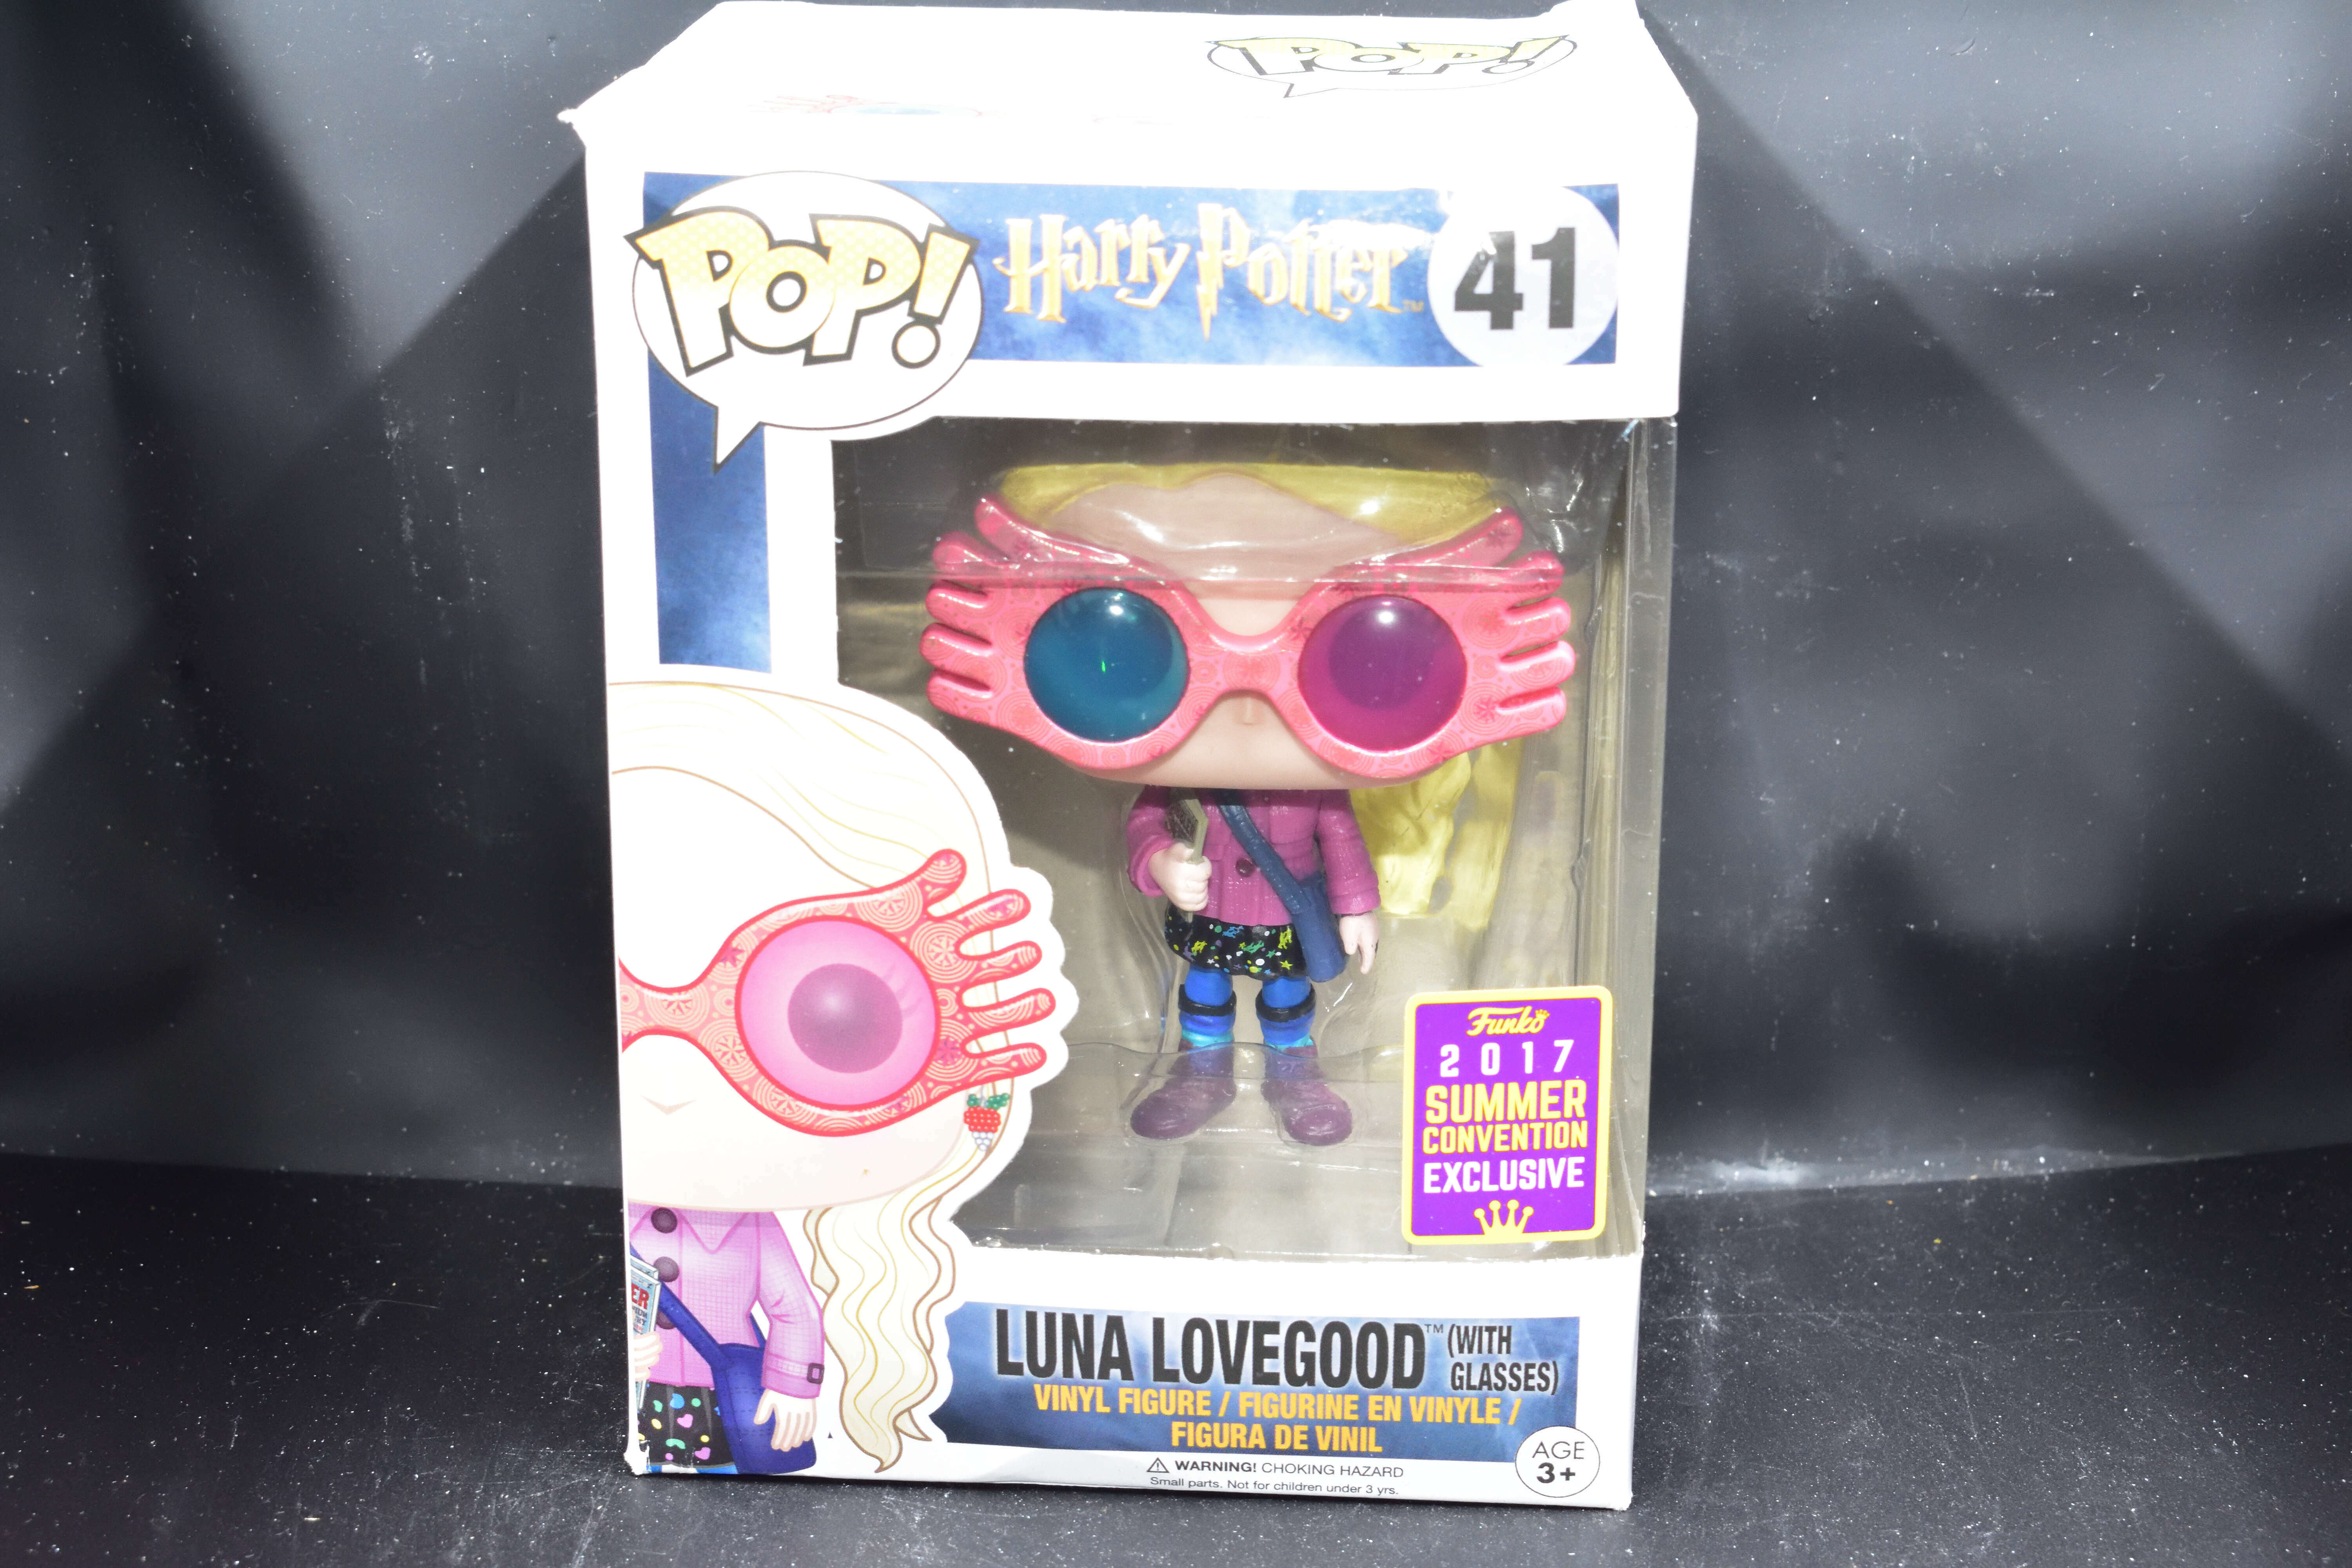 Funko POP! Harry Potter Luna Lovegood Vinyl Figure